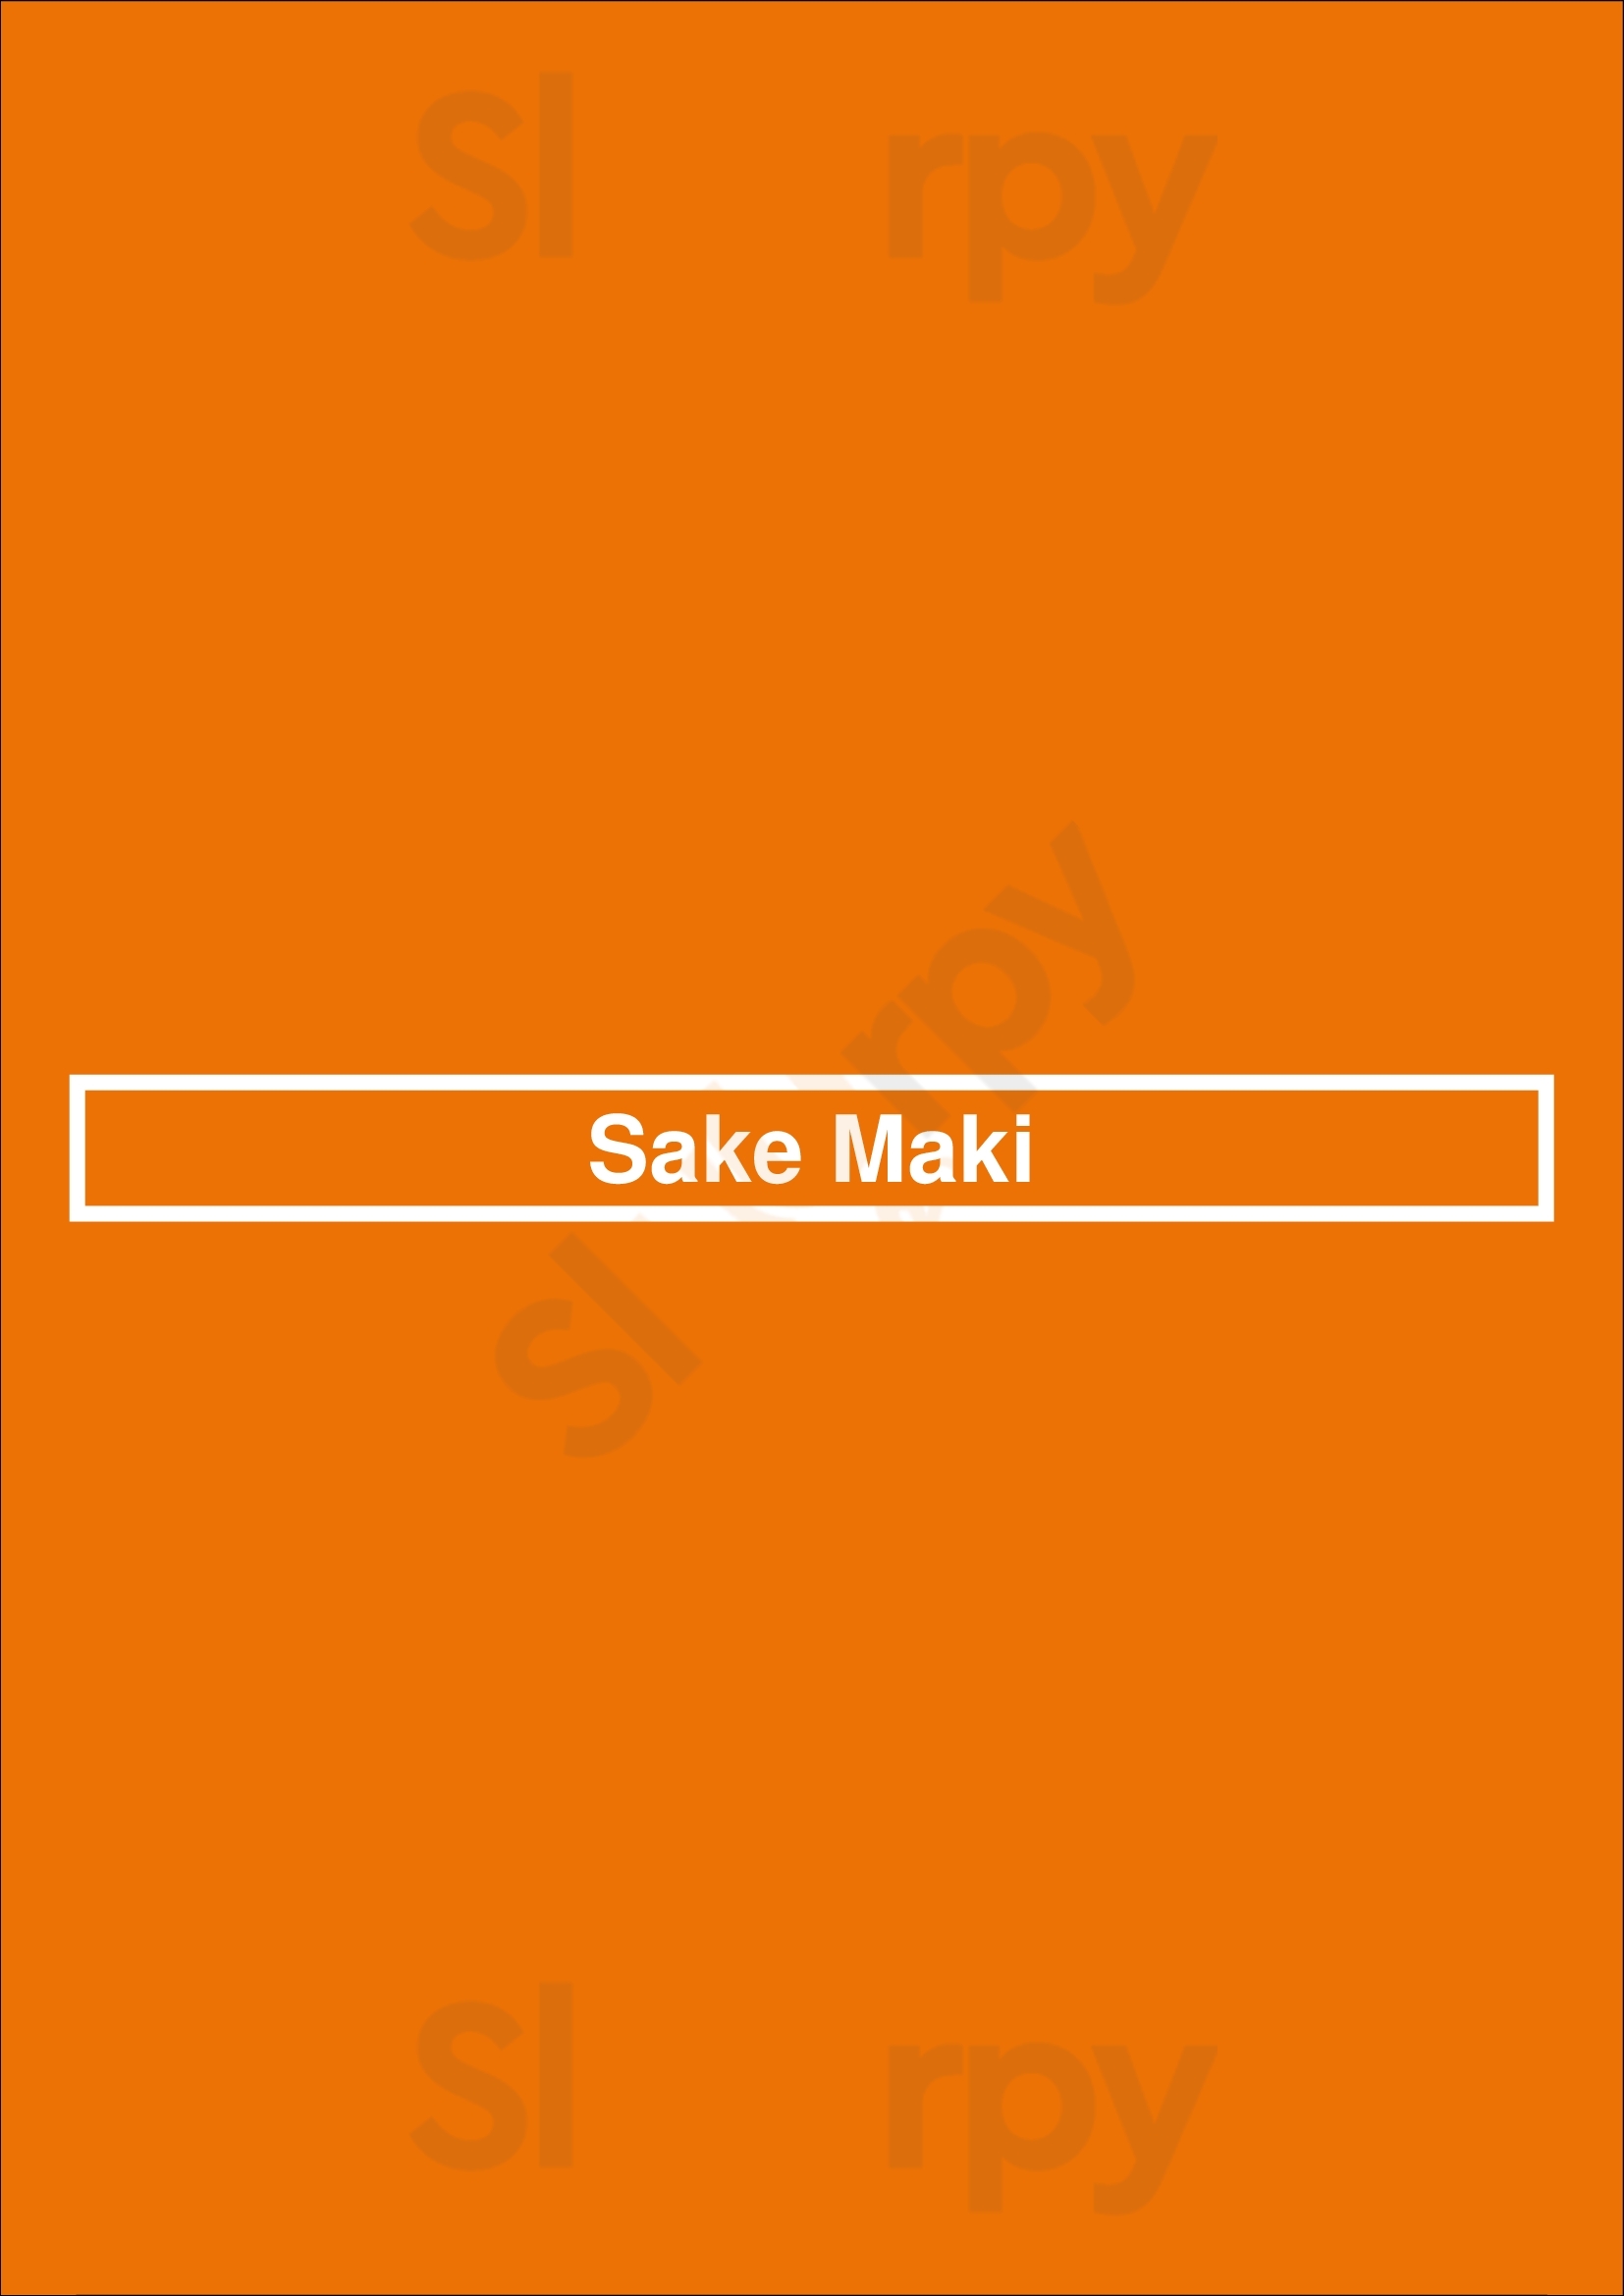 Sake Maki Vancouver Menu - 1